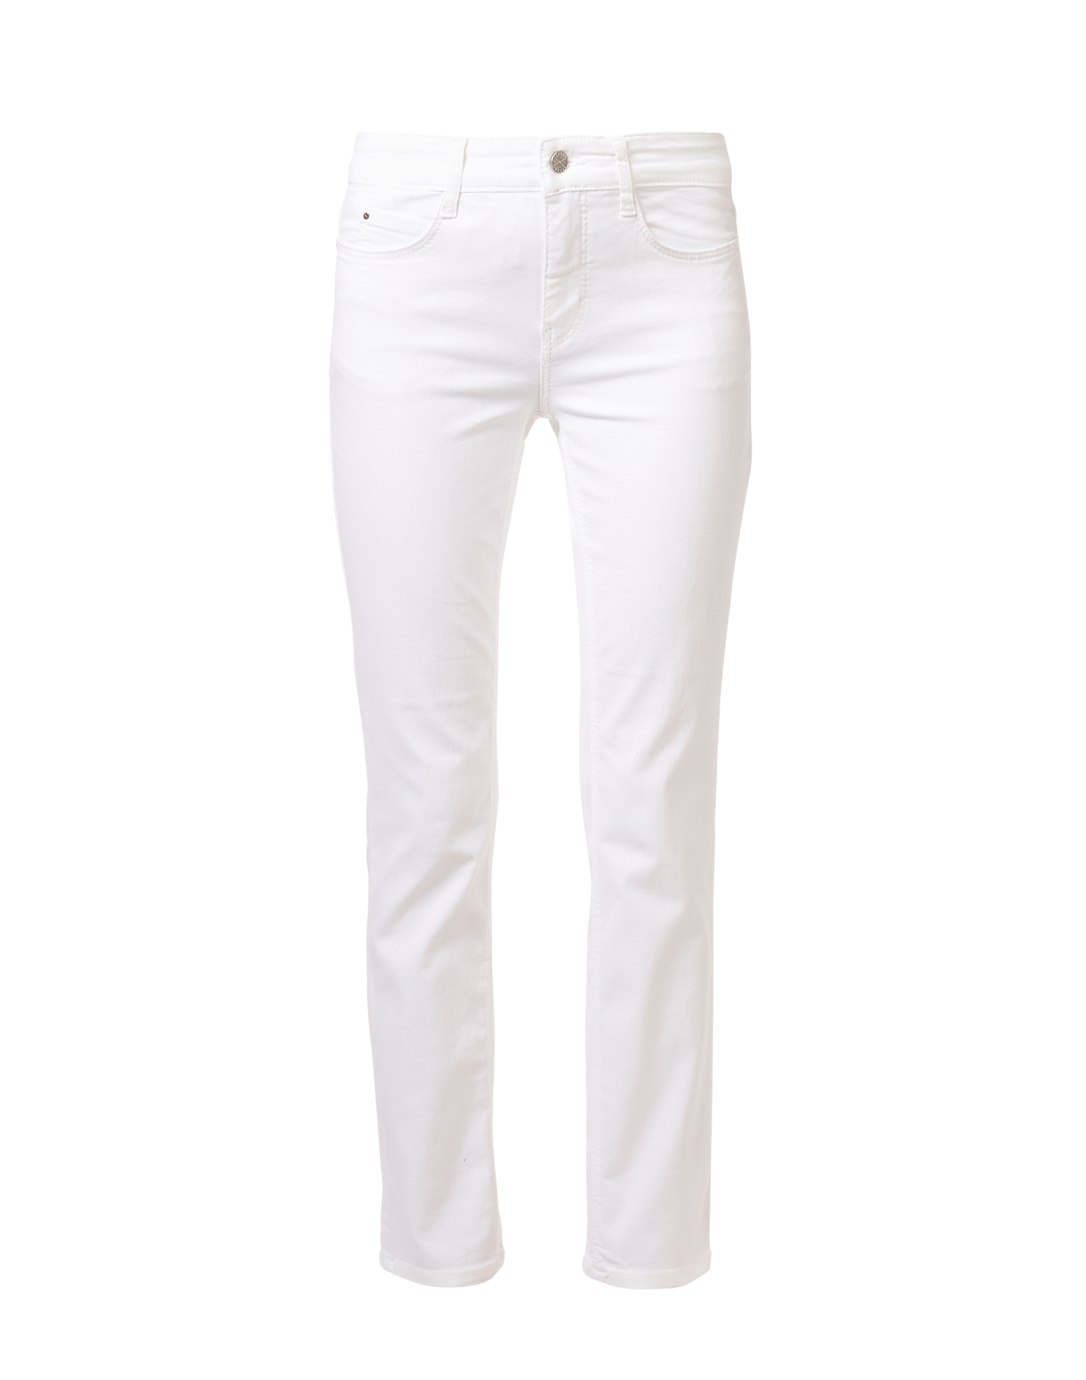 Leg | MAC Dream Straight White Jean Jeans